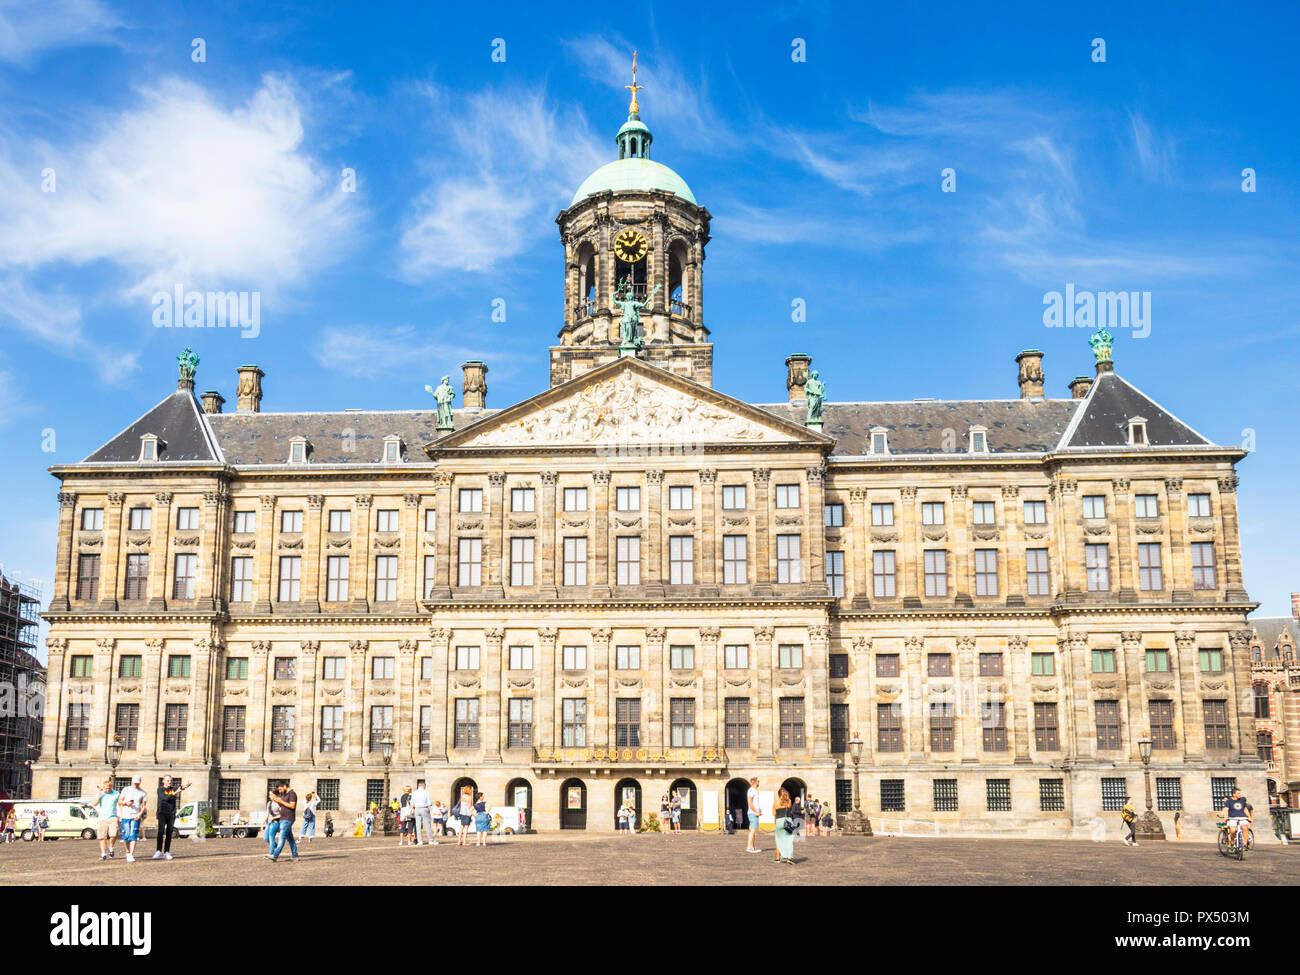 Der Königliche Palast in Amsterdam Koninklijk Paleis in Dam Square Amsterdam Amsterdam, Niederlande Holland EU Europa Stockfoto